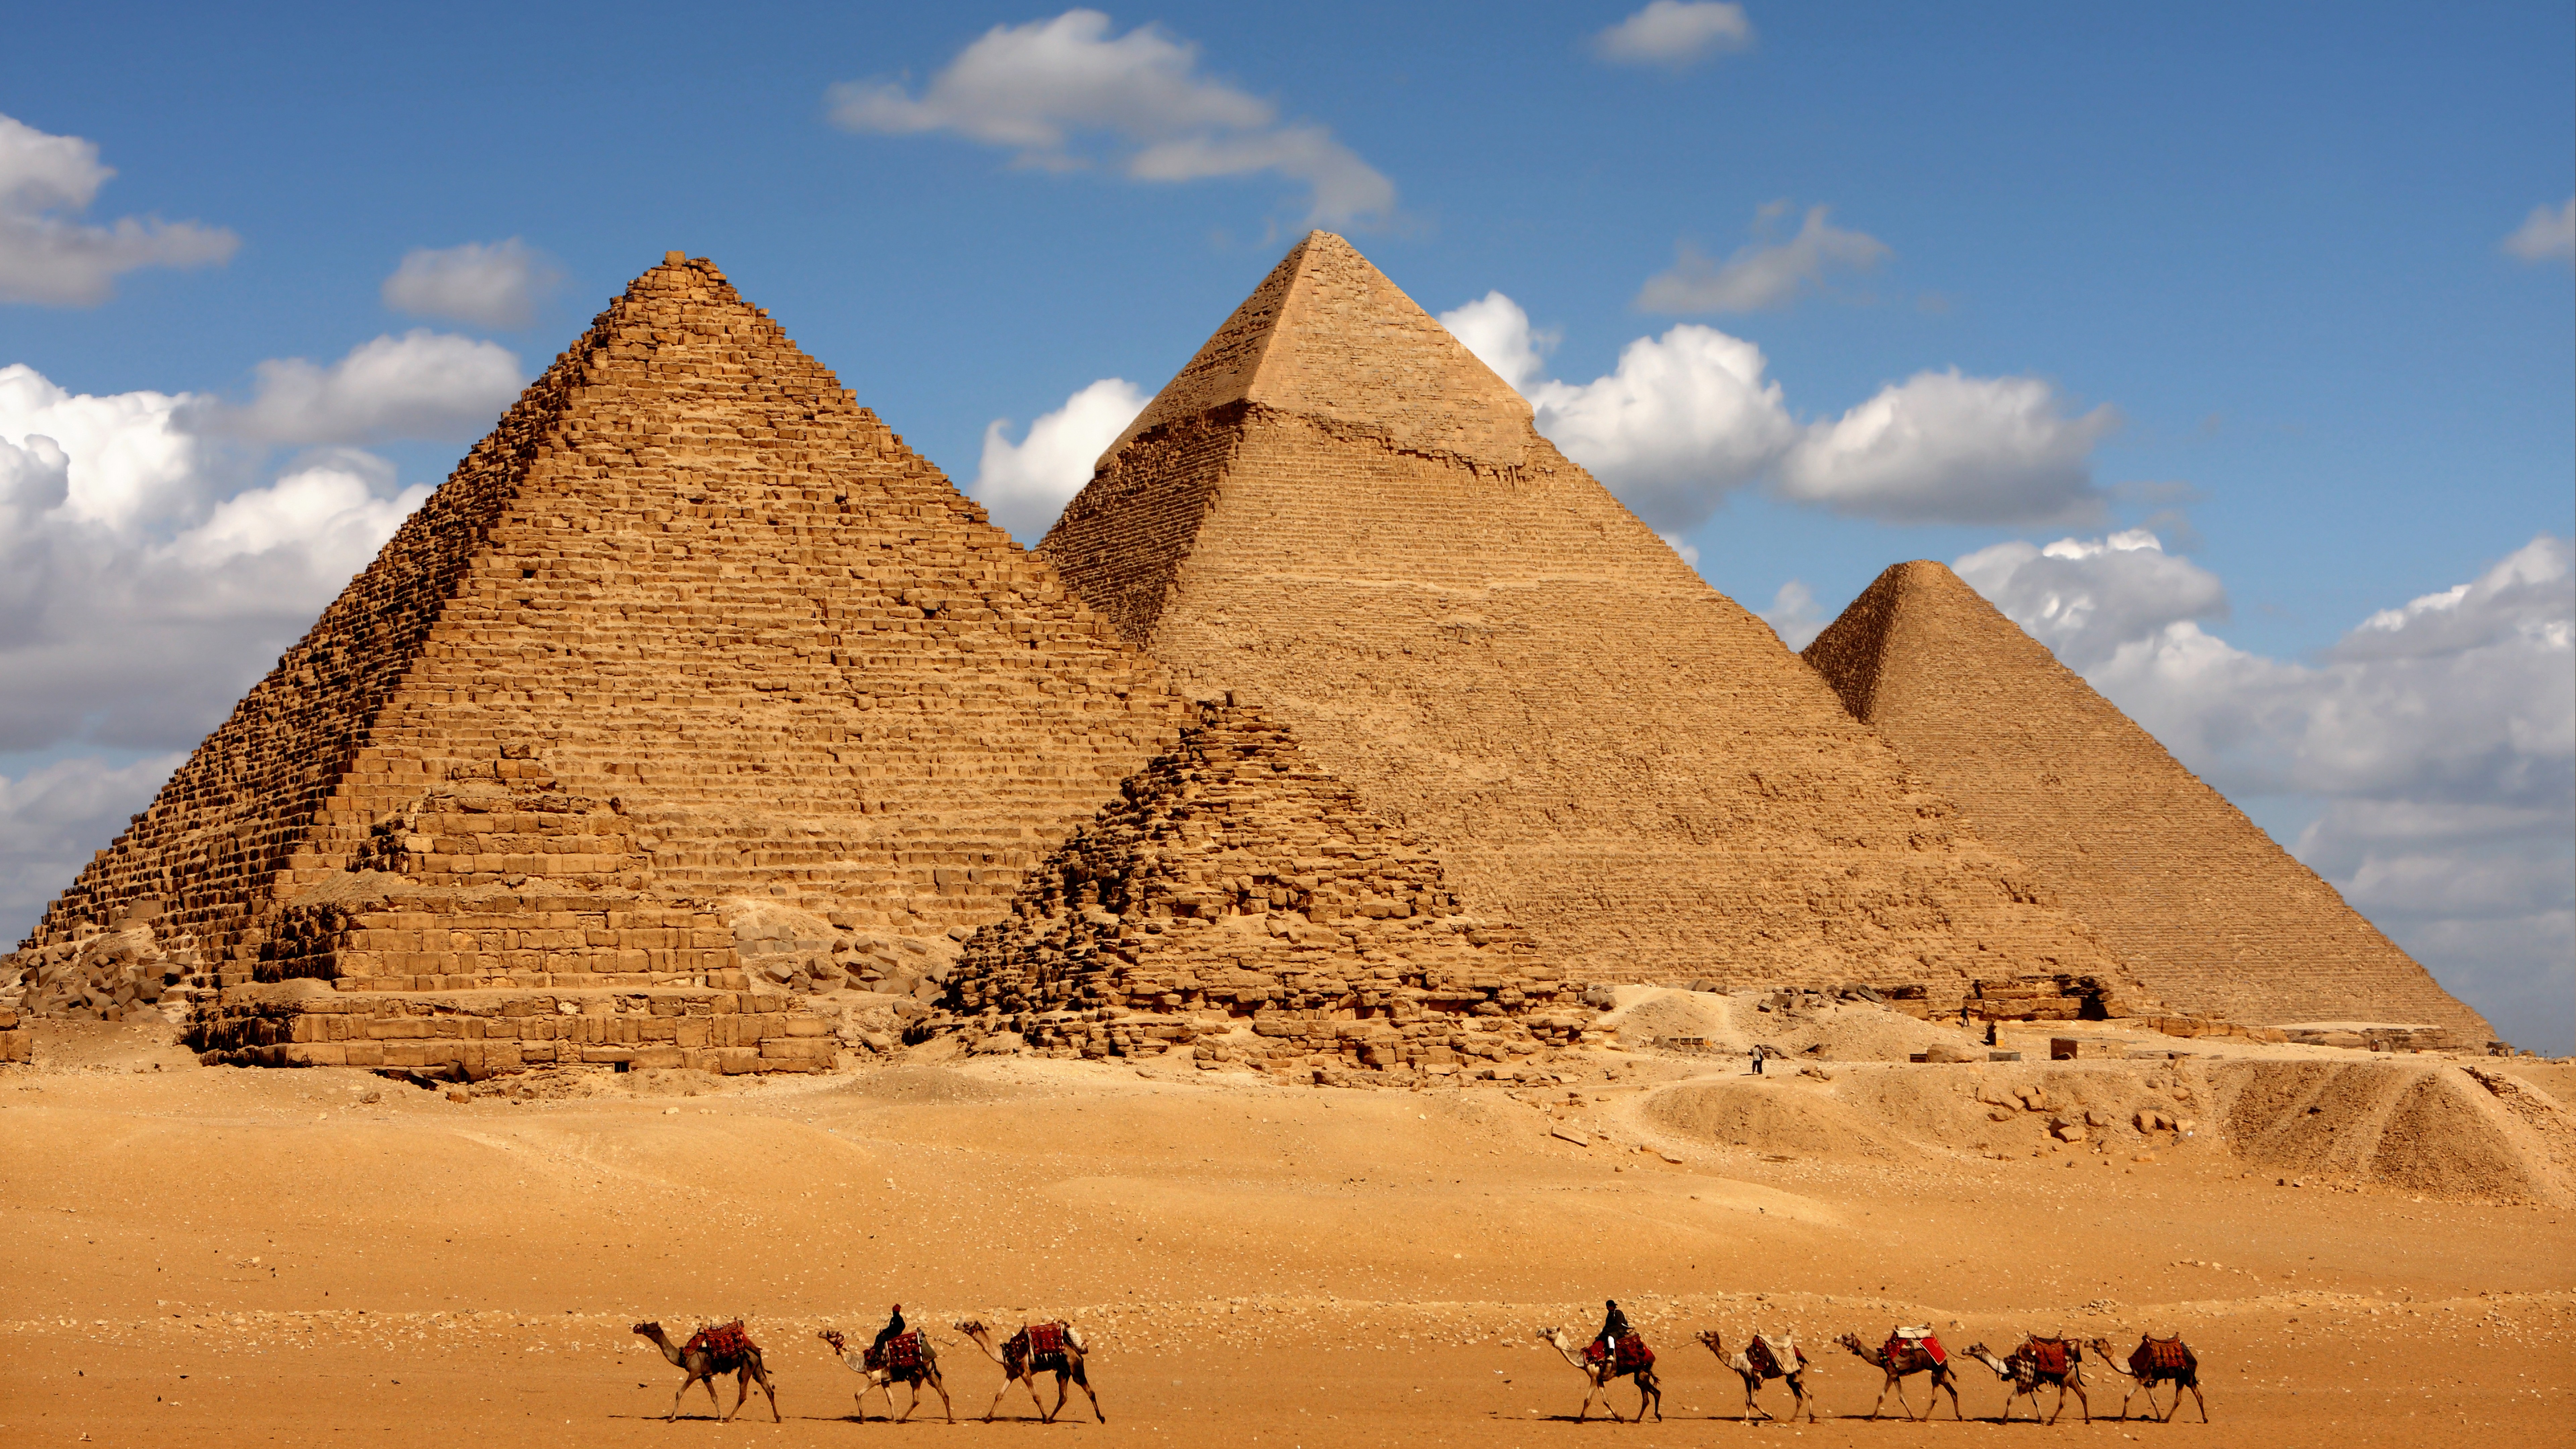 Misr piramidalari haqida. Каир пирамиды. Пирамиды Гизы. Великие пирамиды Гизы. Пирамиды Гизы Каир Египет.